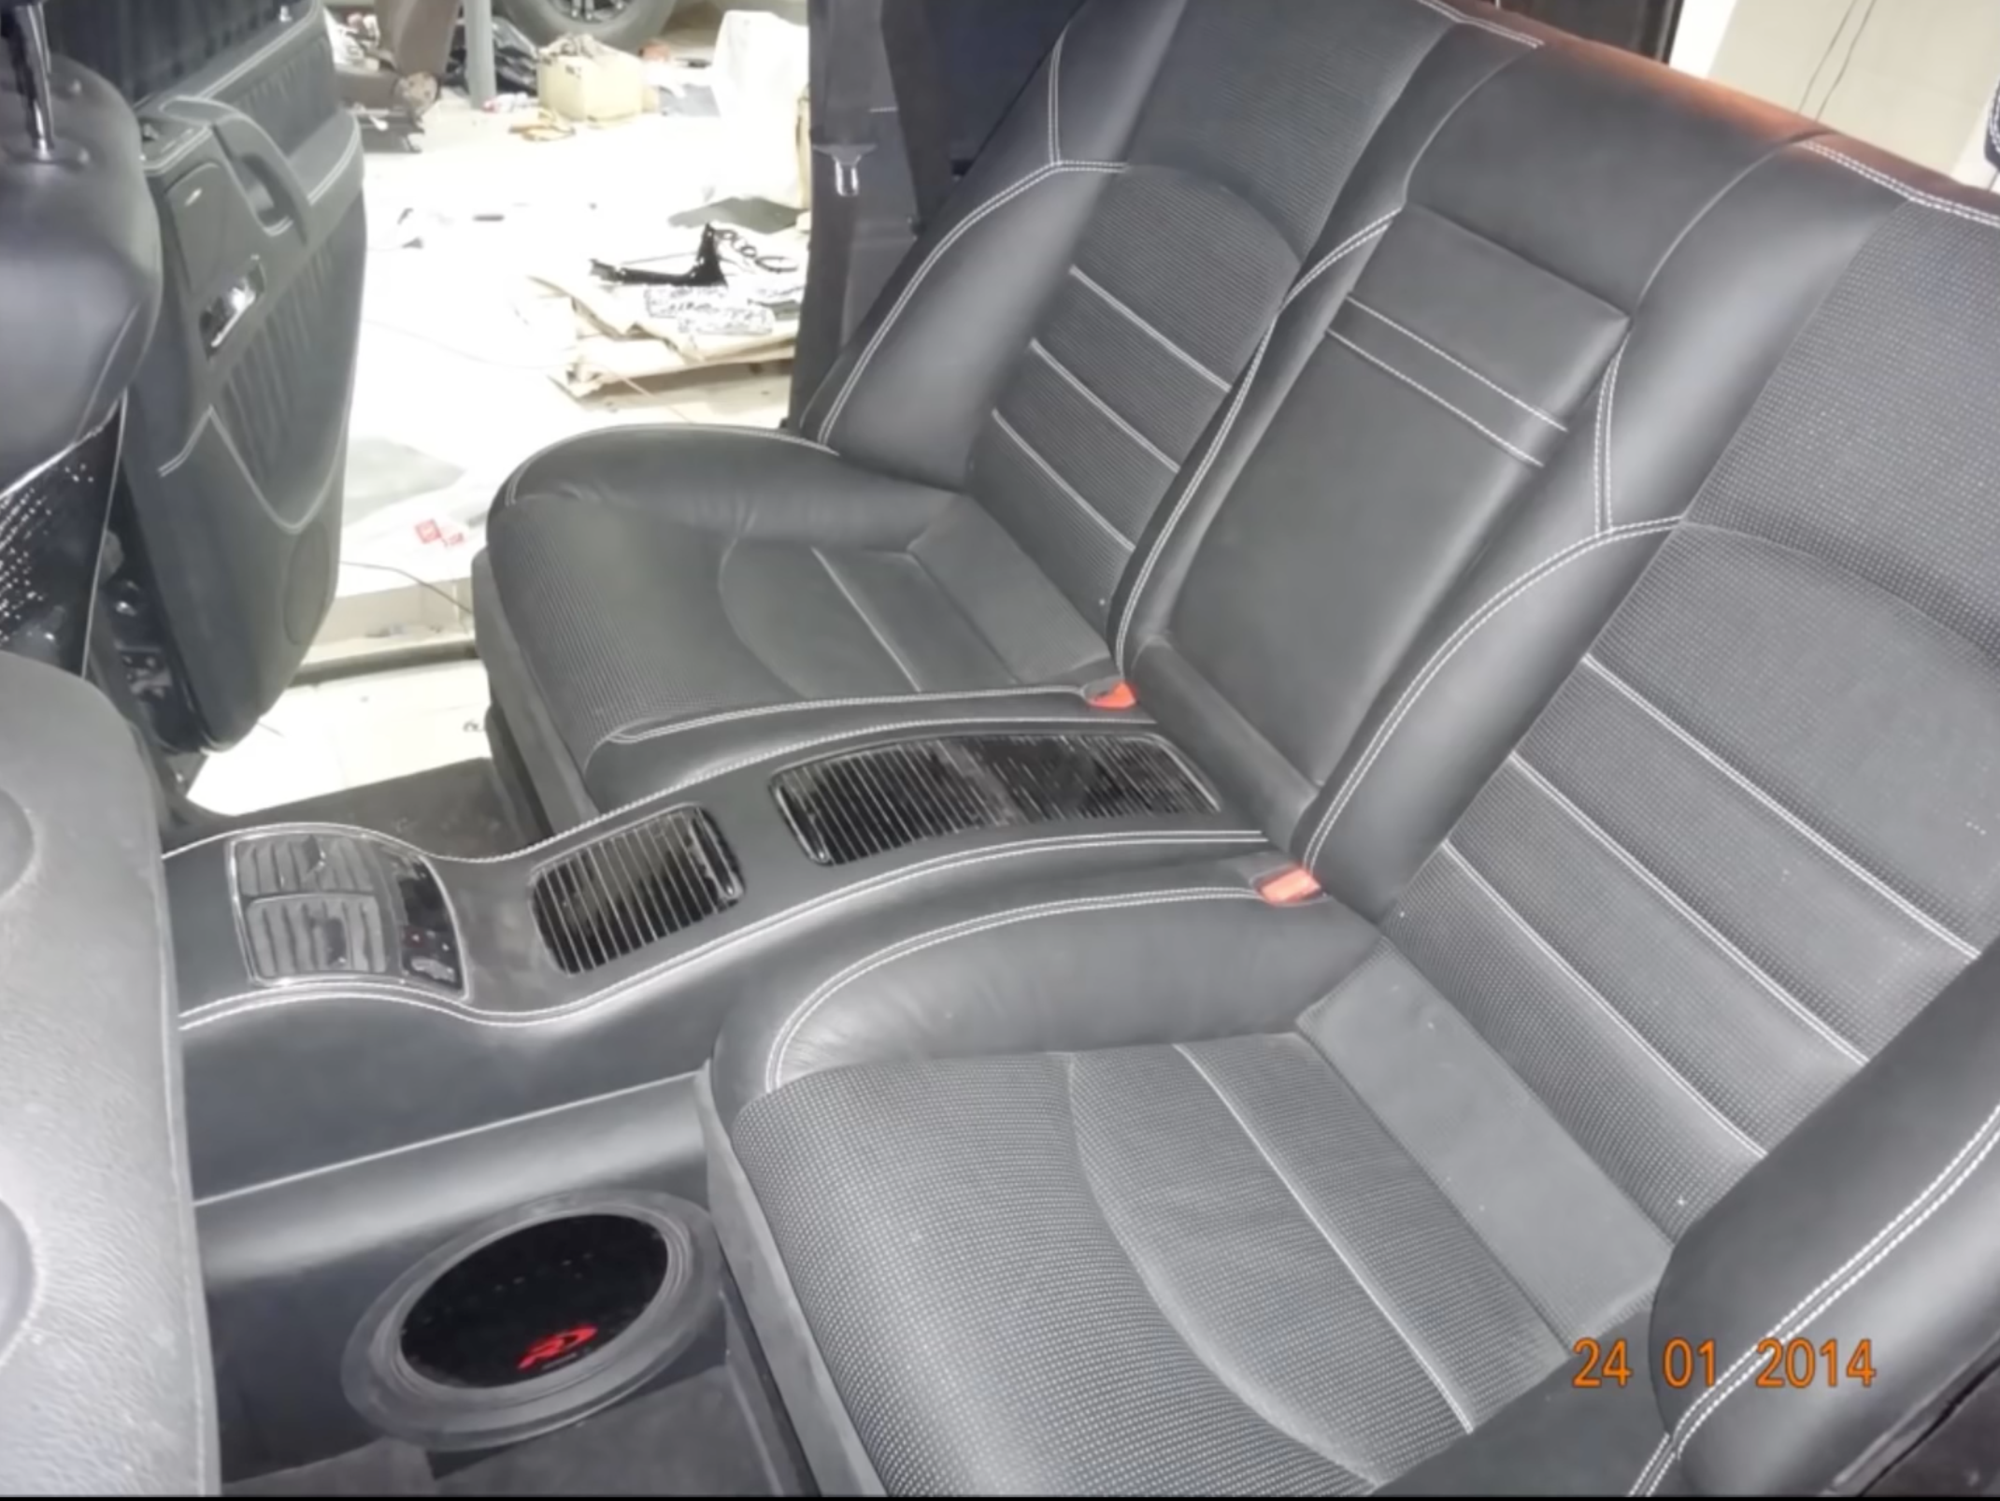 Colorbond BMW car interior transformation - Plasti Dip